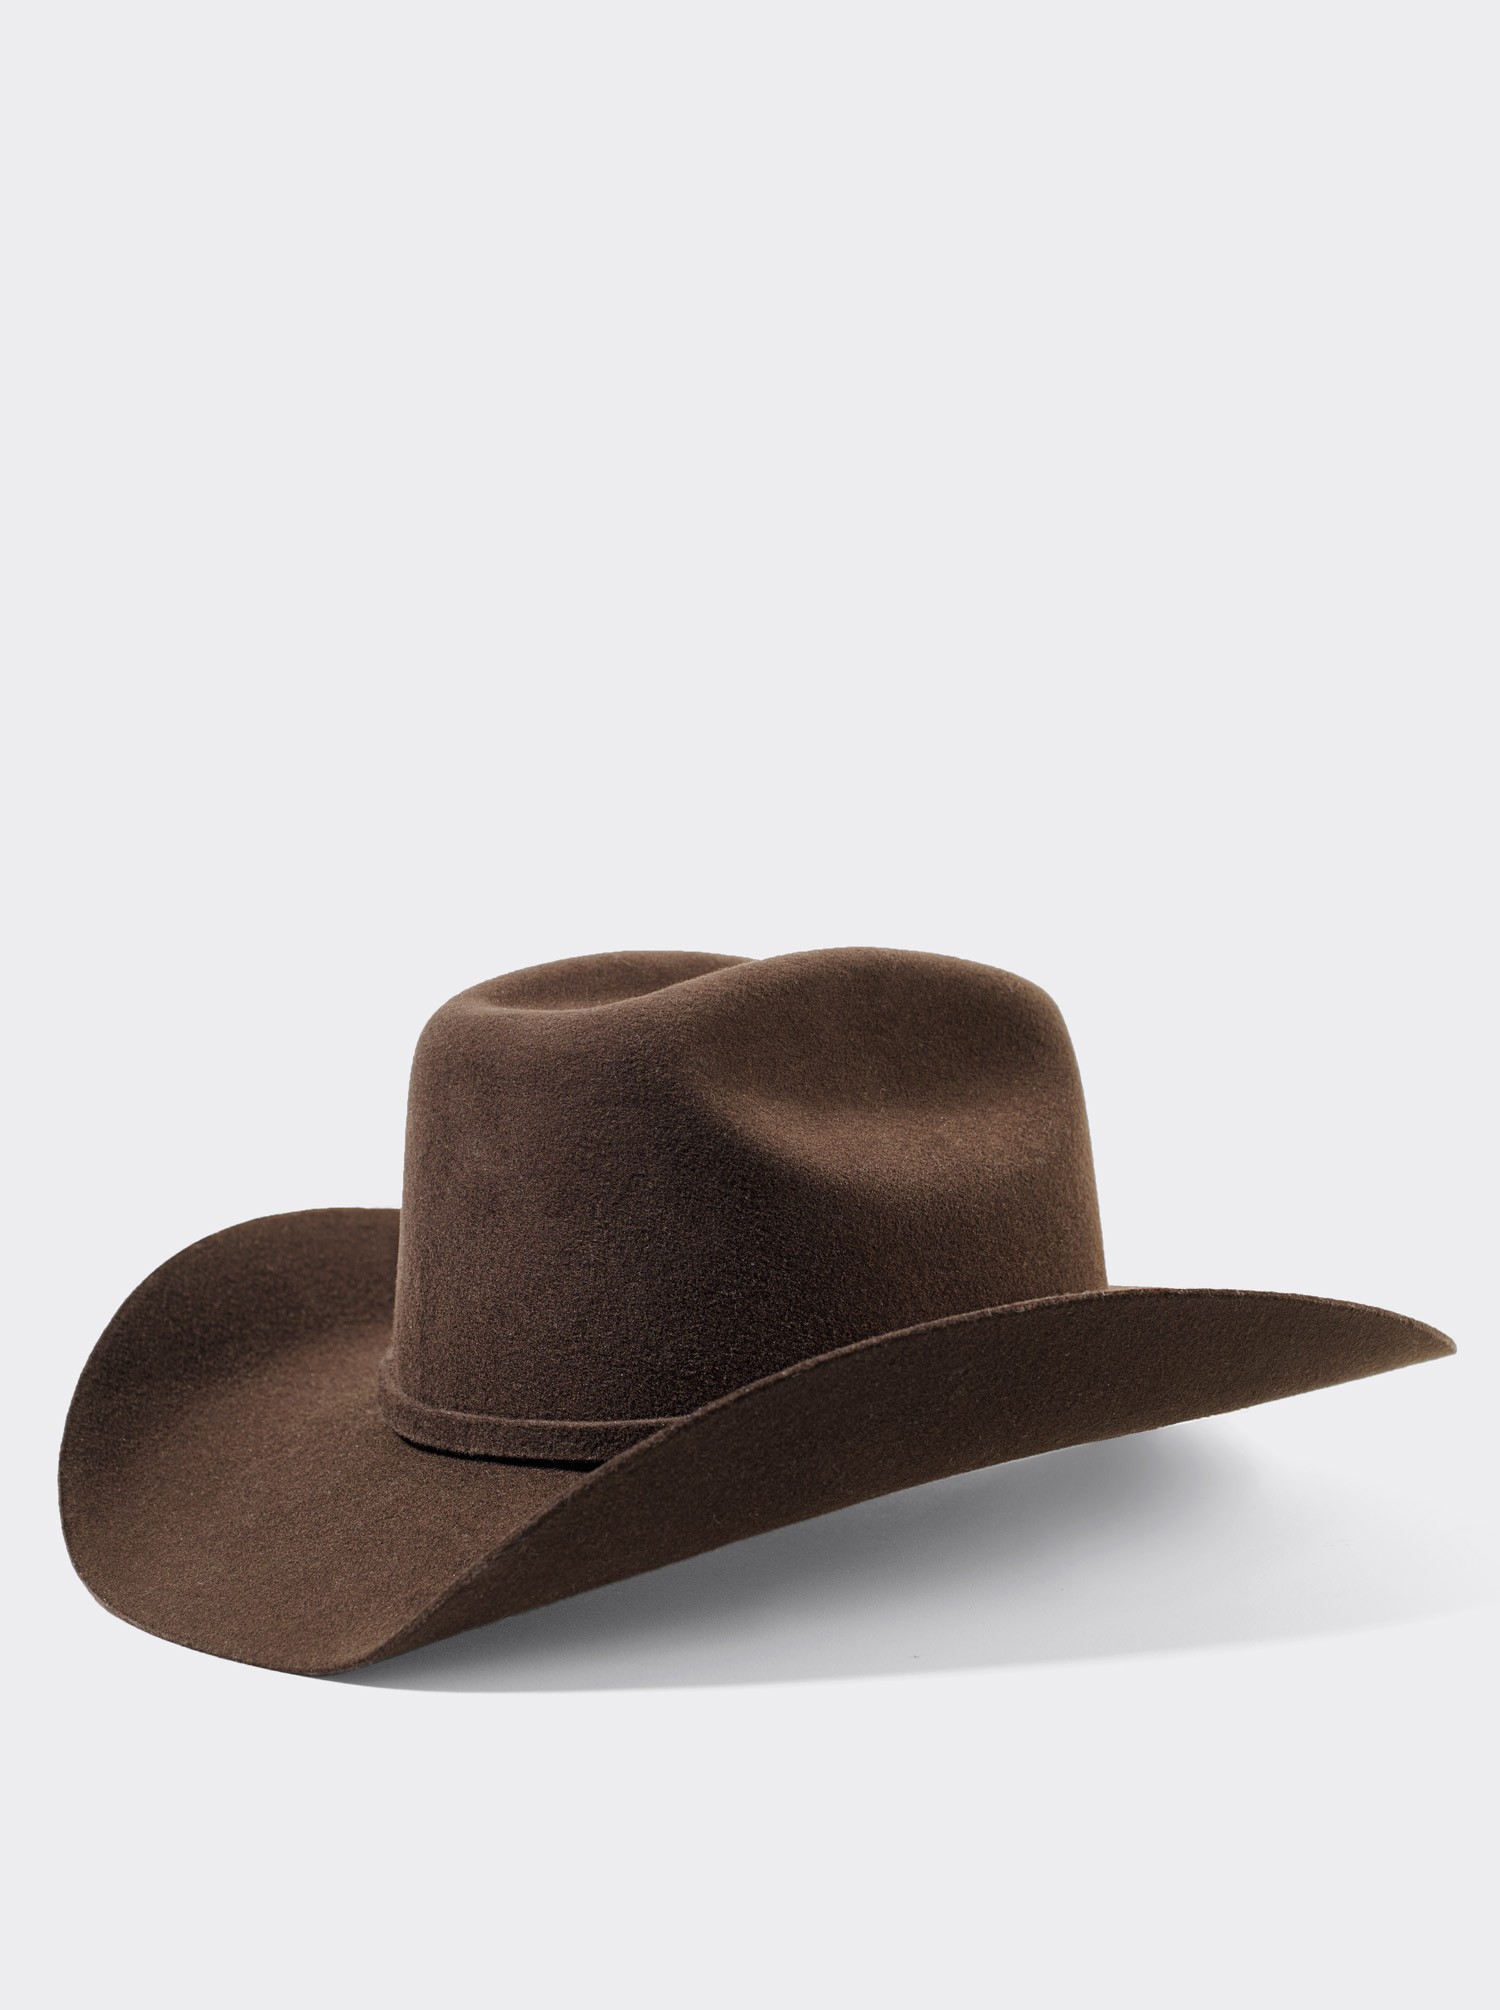 Texana Style Cowboy Hat in Chocolate Wool - Siete Leguas US